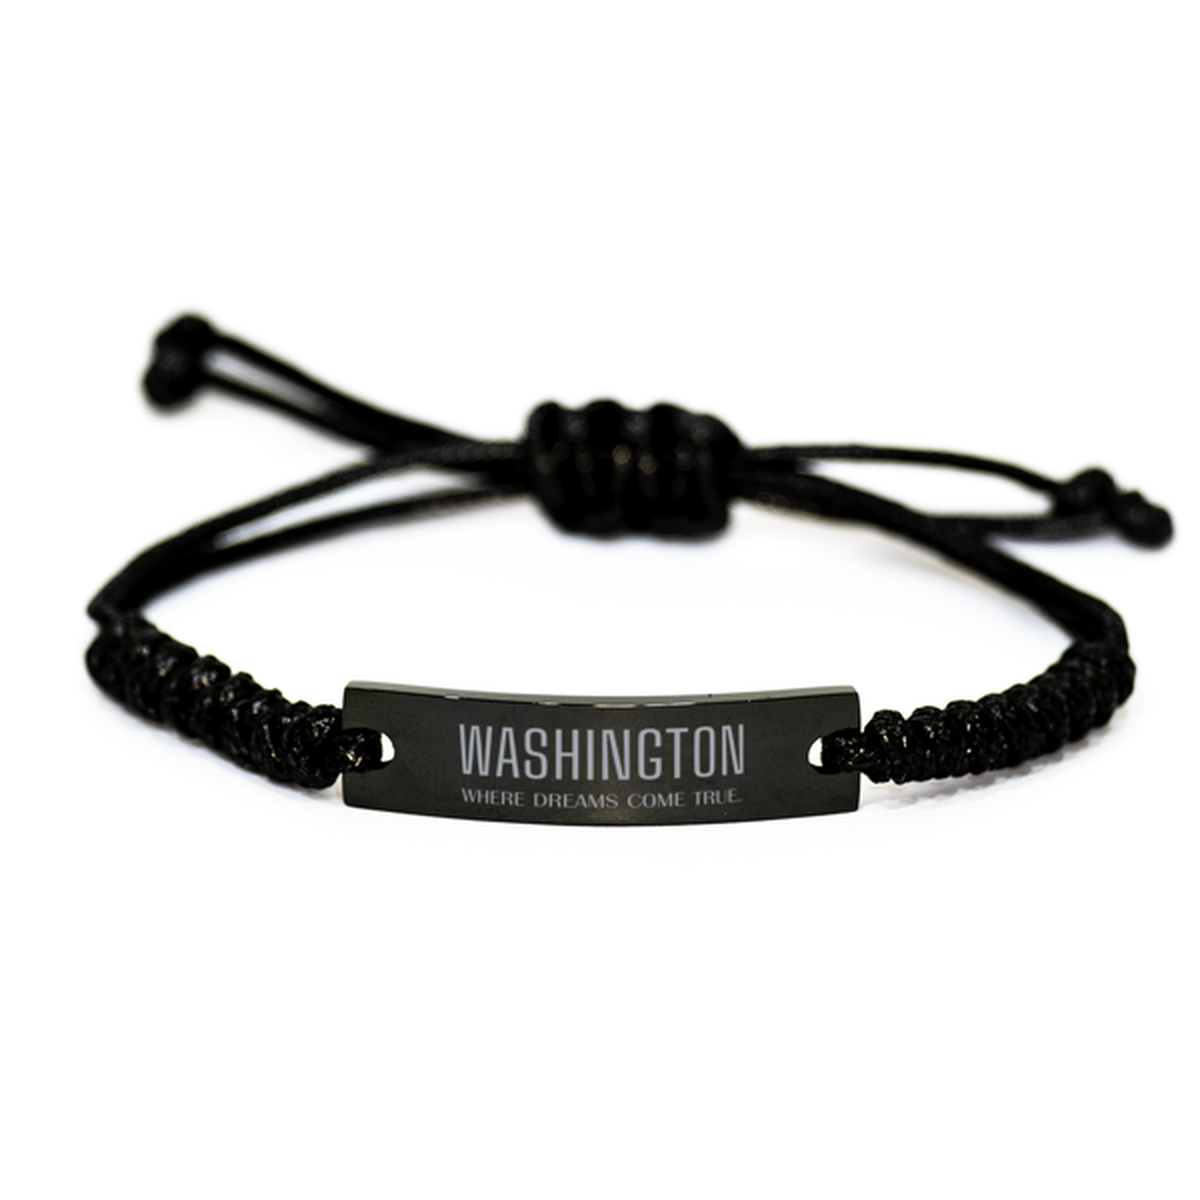 Love Washington State Black Rope Bracelet, Washington Where dreams come true, Birthday Inspirational Gifts For Washington Men, Women, Friends